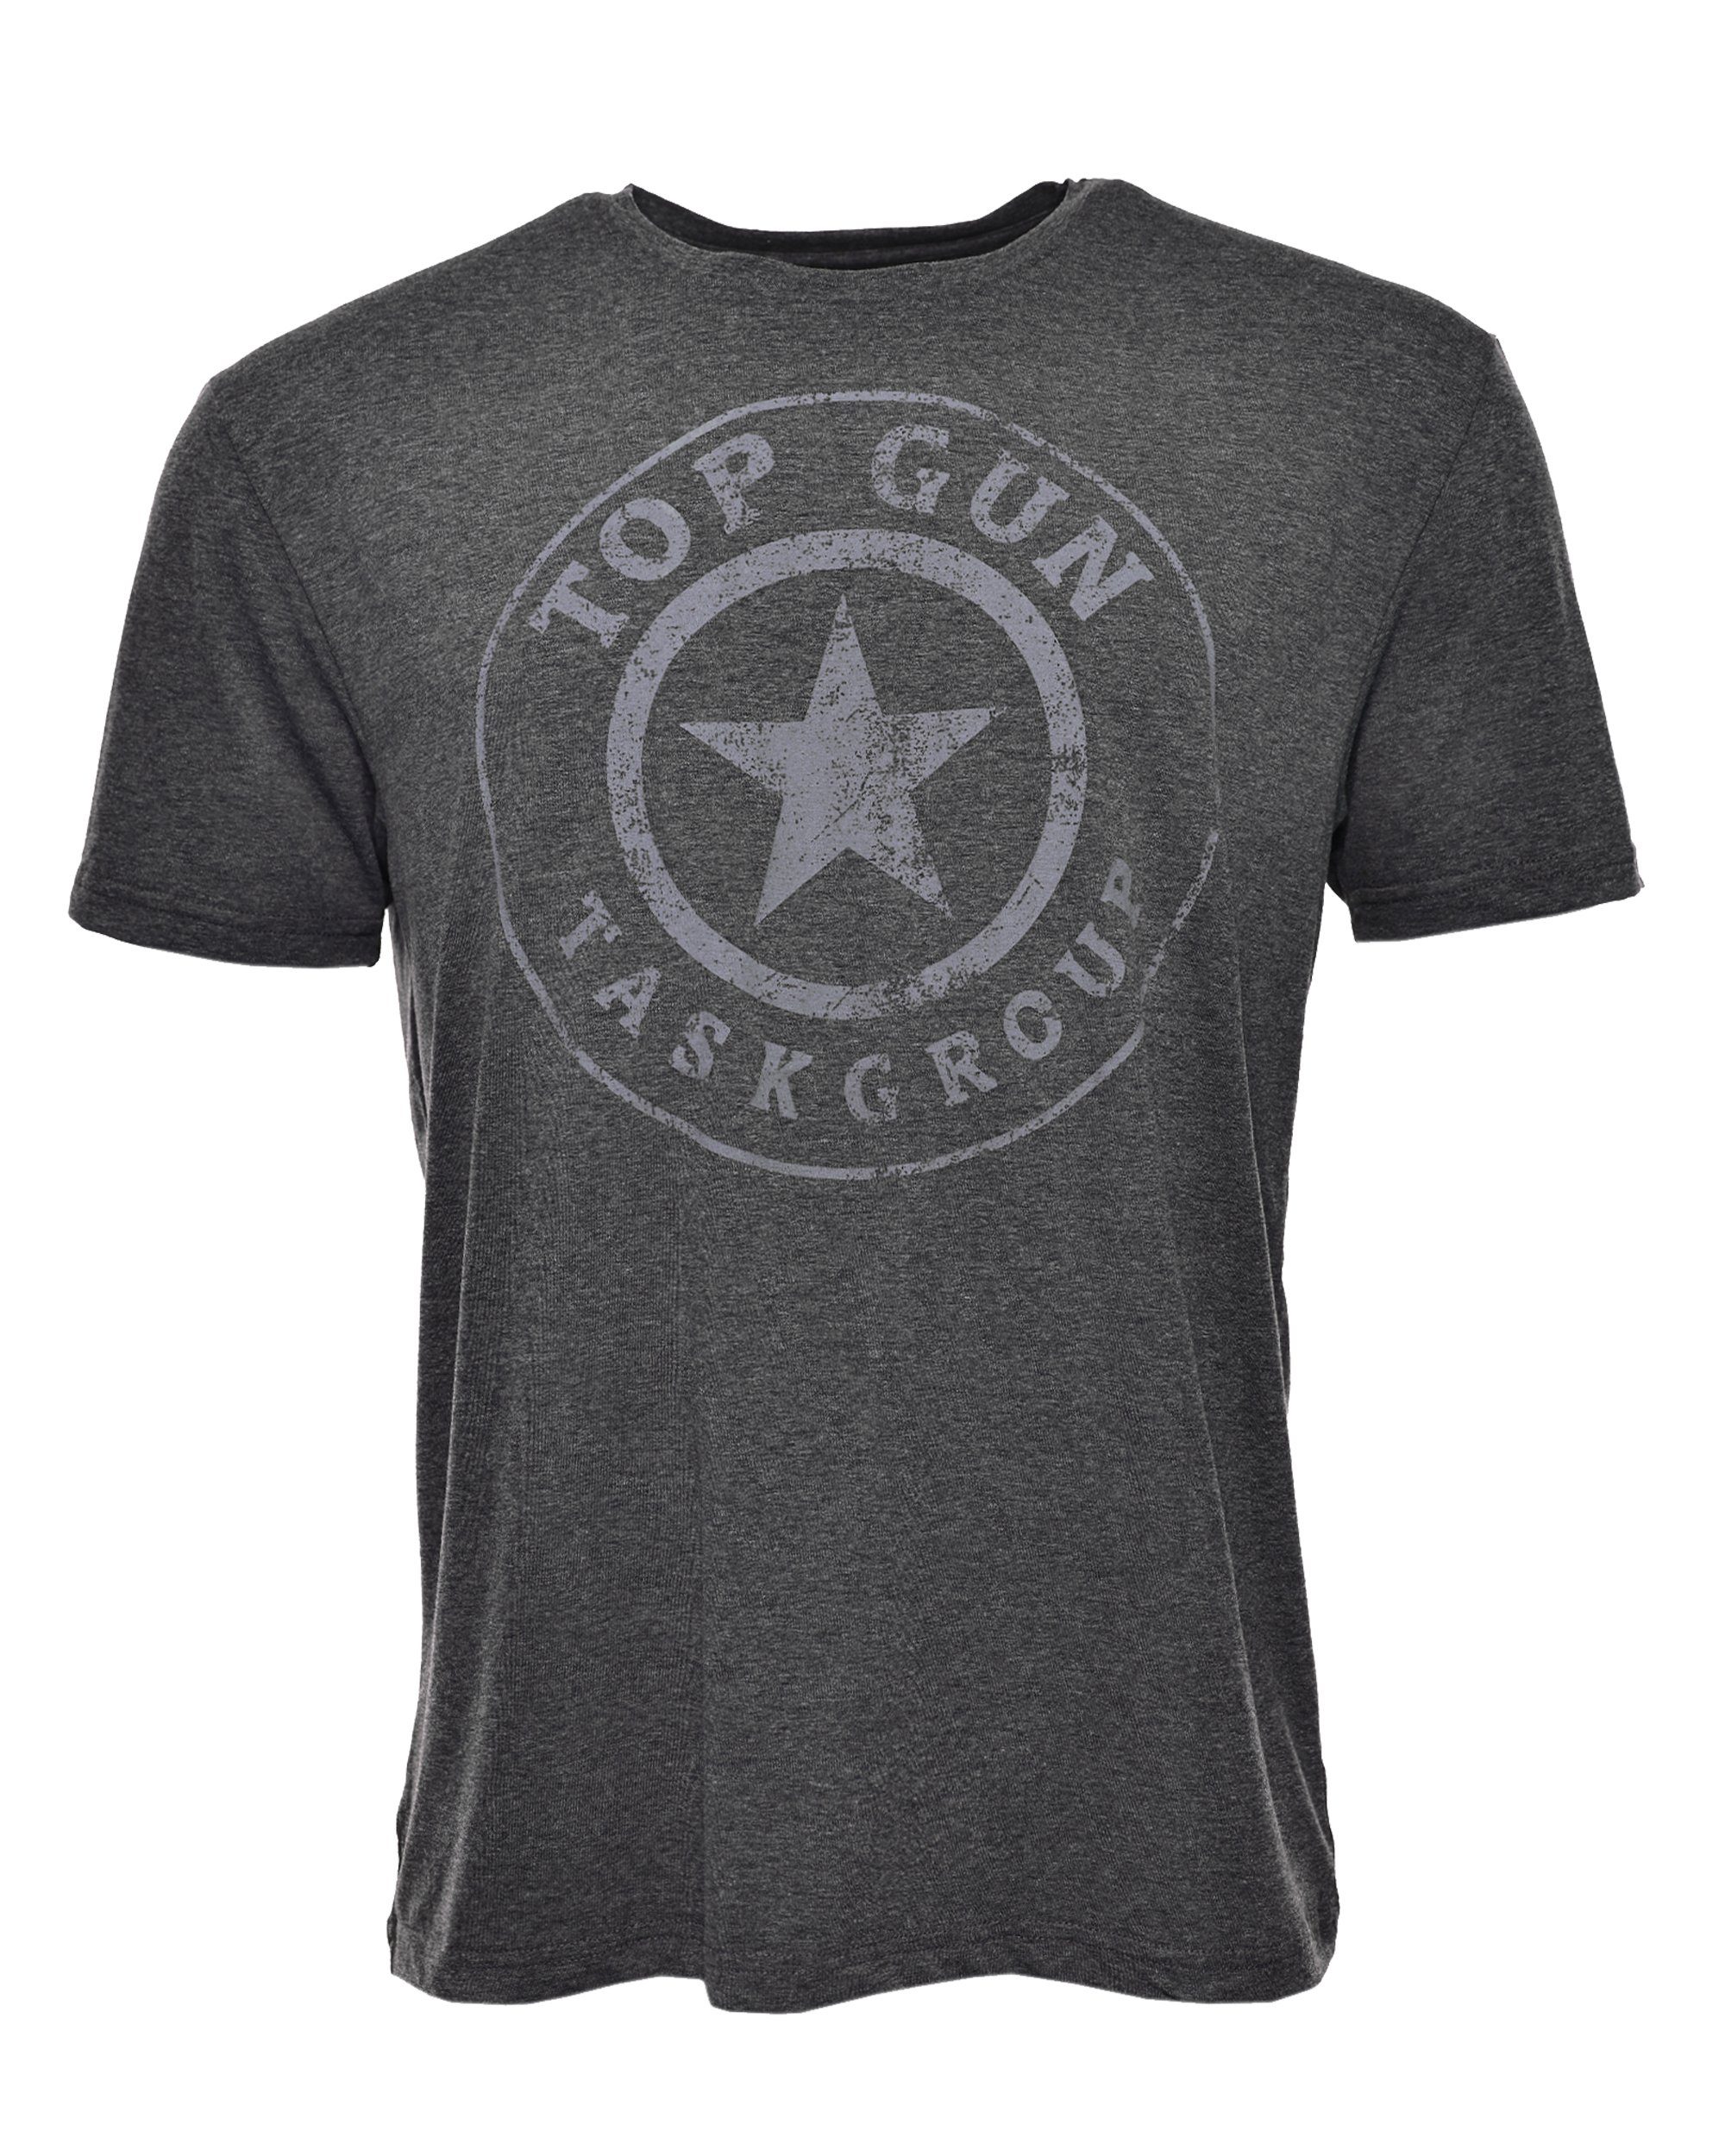 GUN TOP anthrazit T-Shirt TG20212110